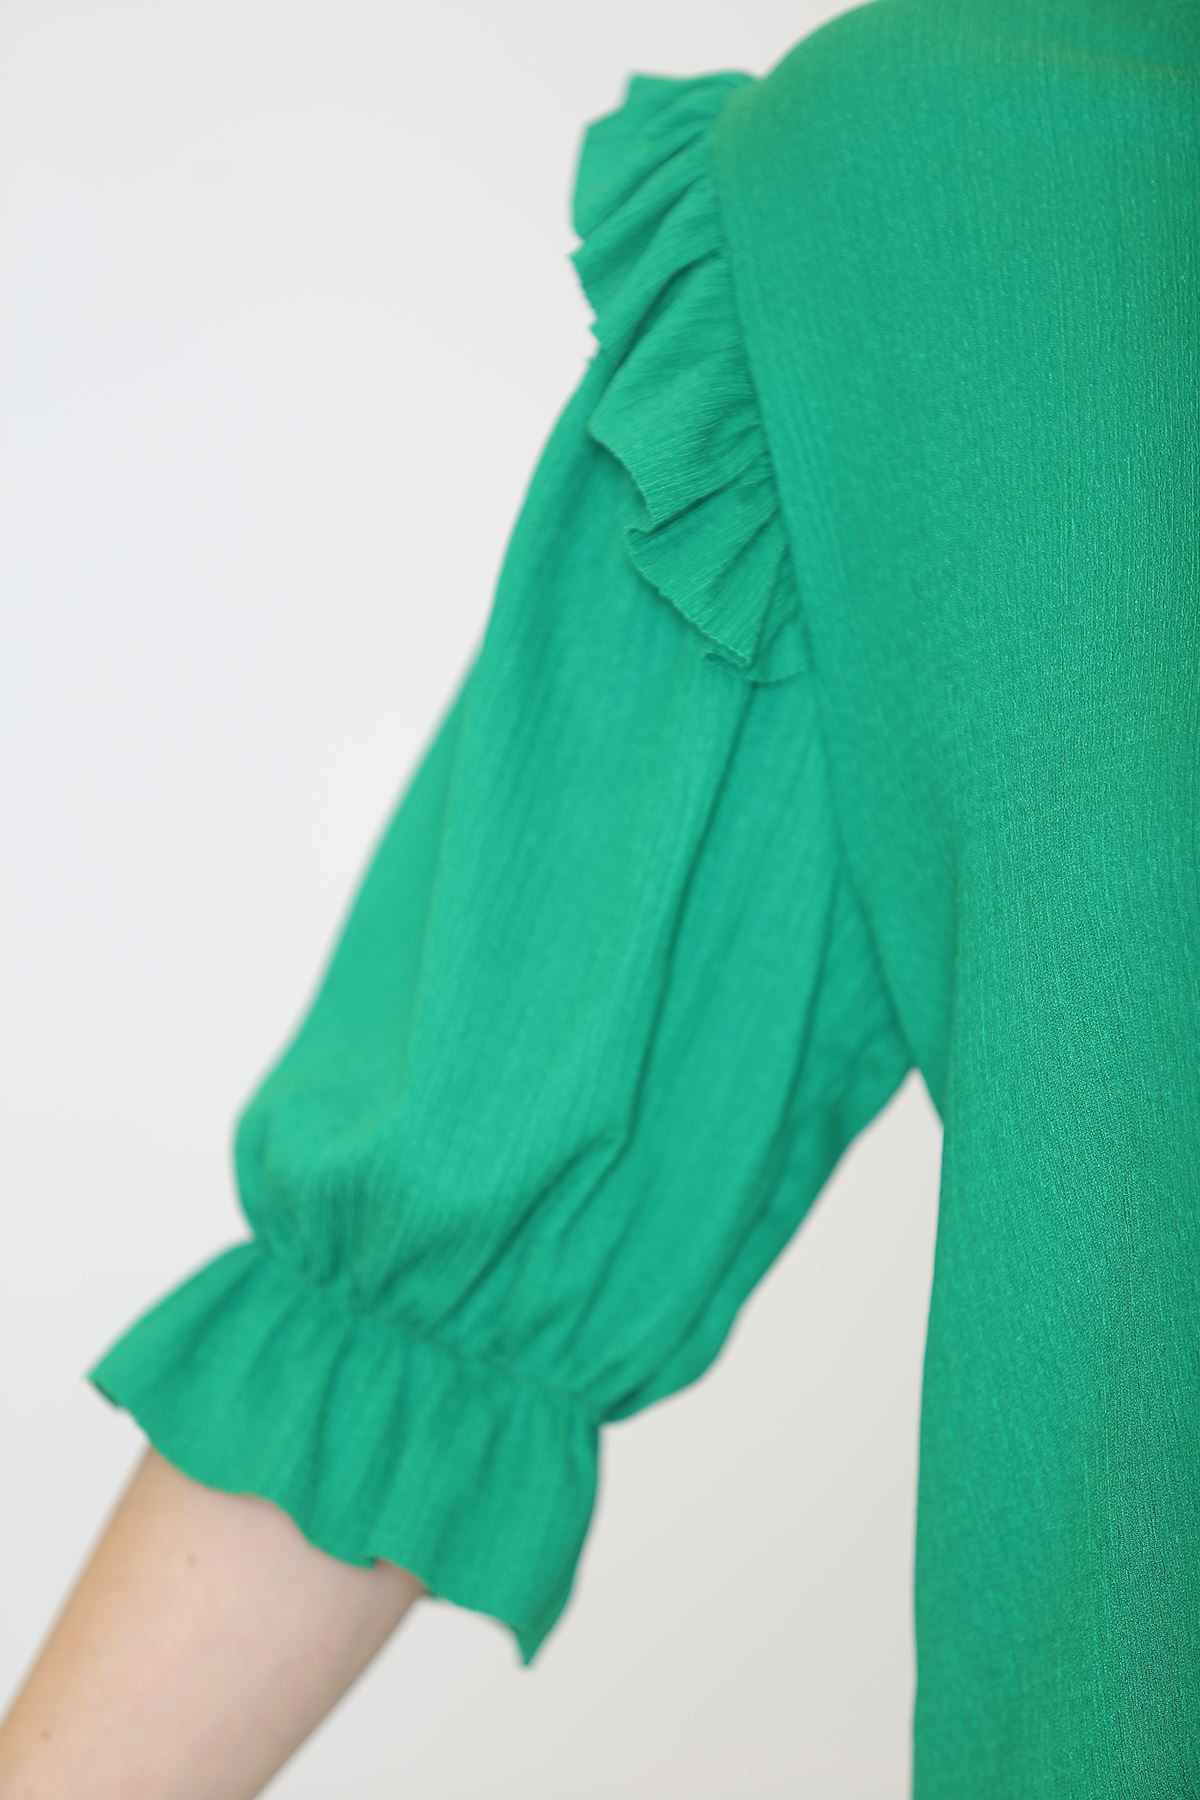 Omuz Fırfırlı Bluz Yeşil - 3460.105.